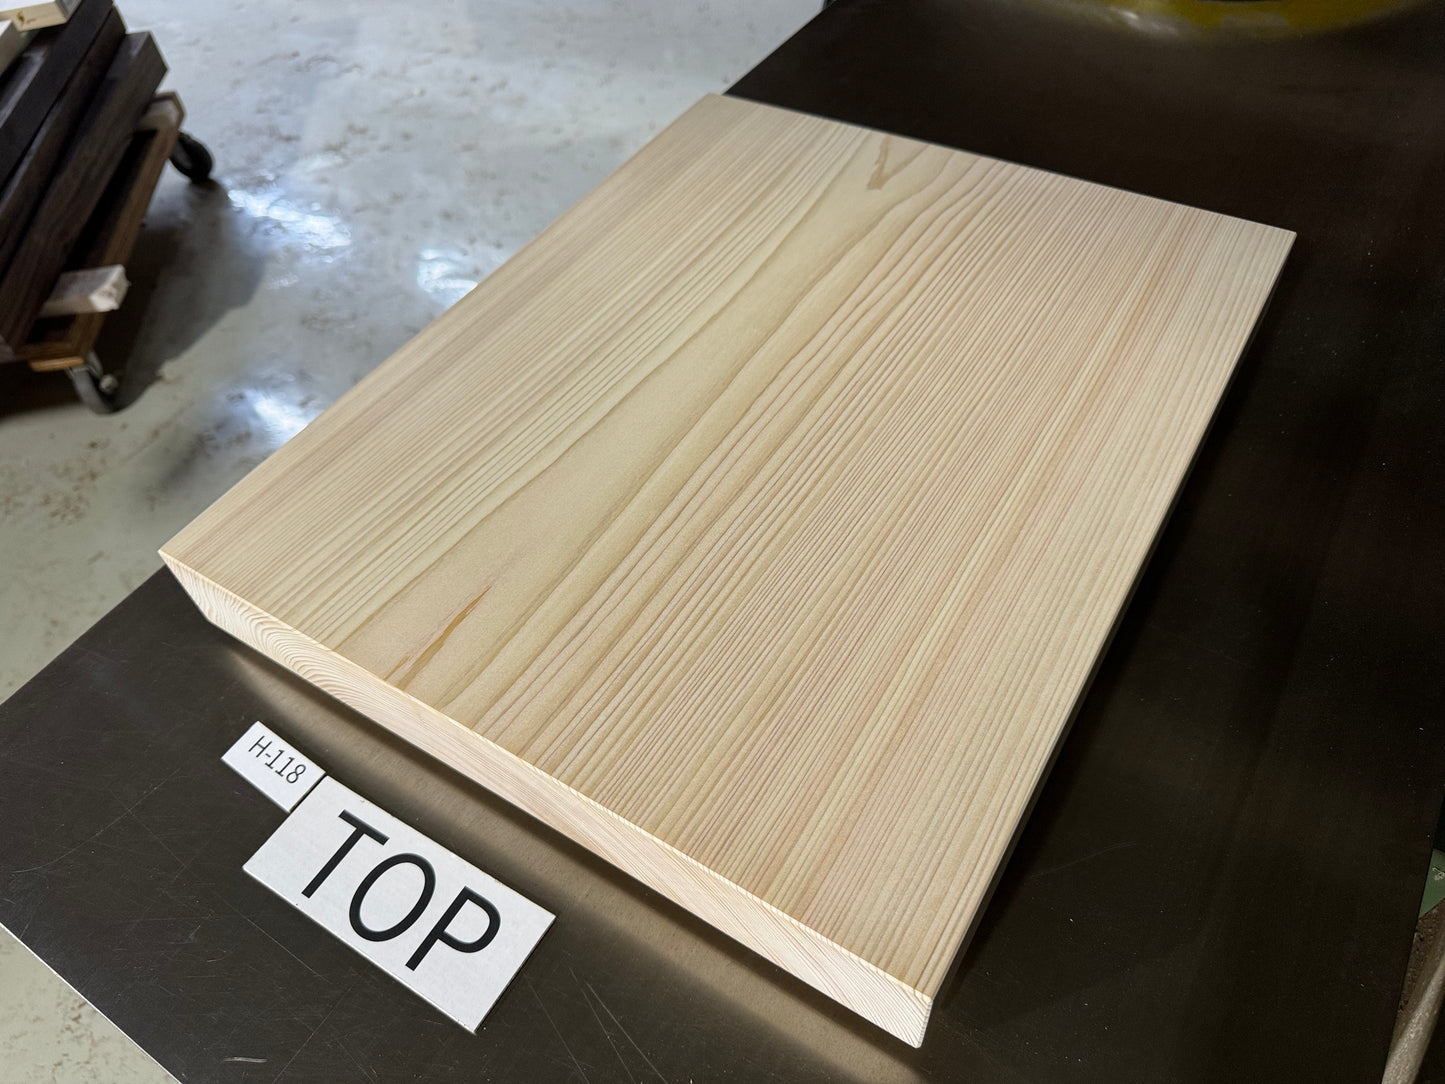 HINOKI cutting board（Japanese Cypress）  No,H-118